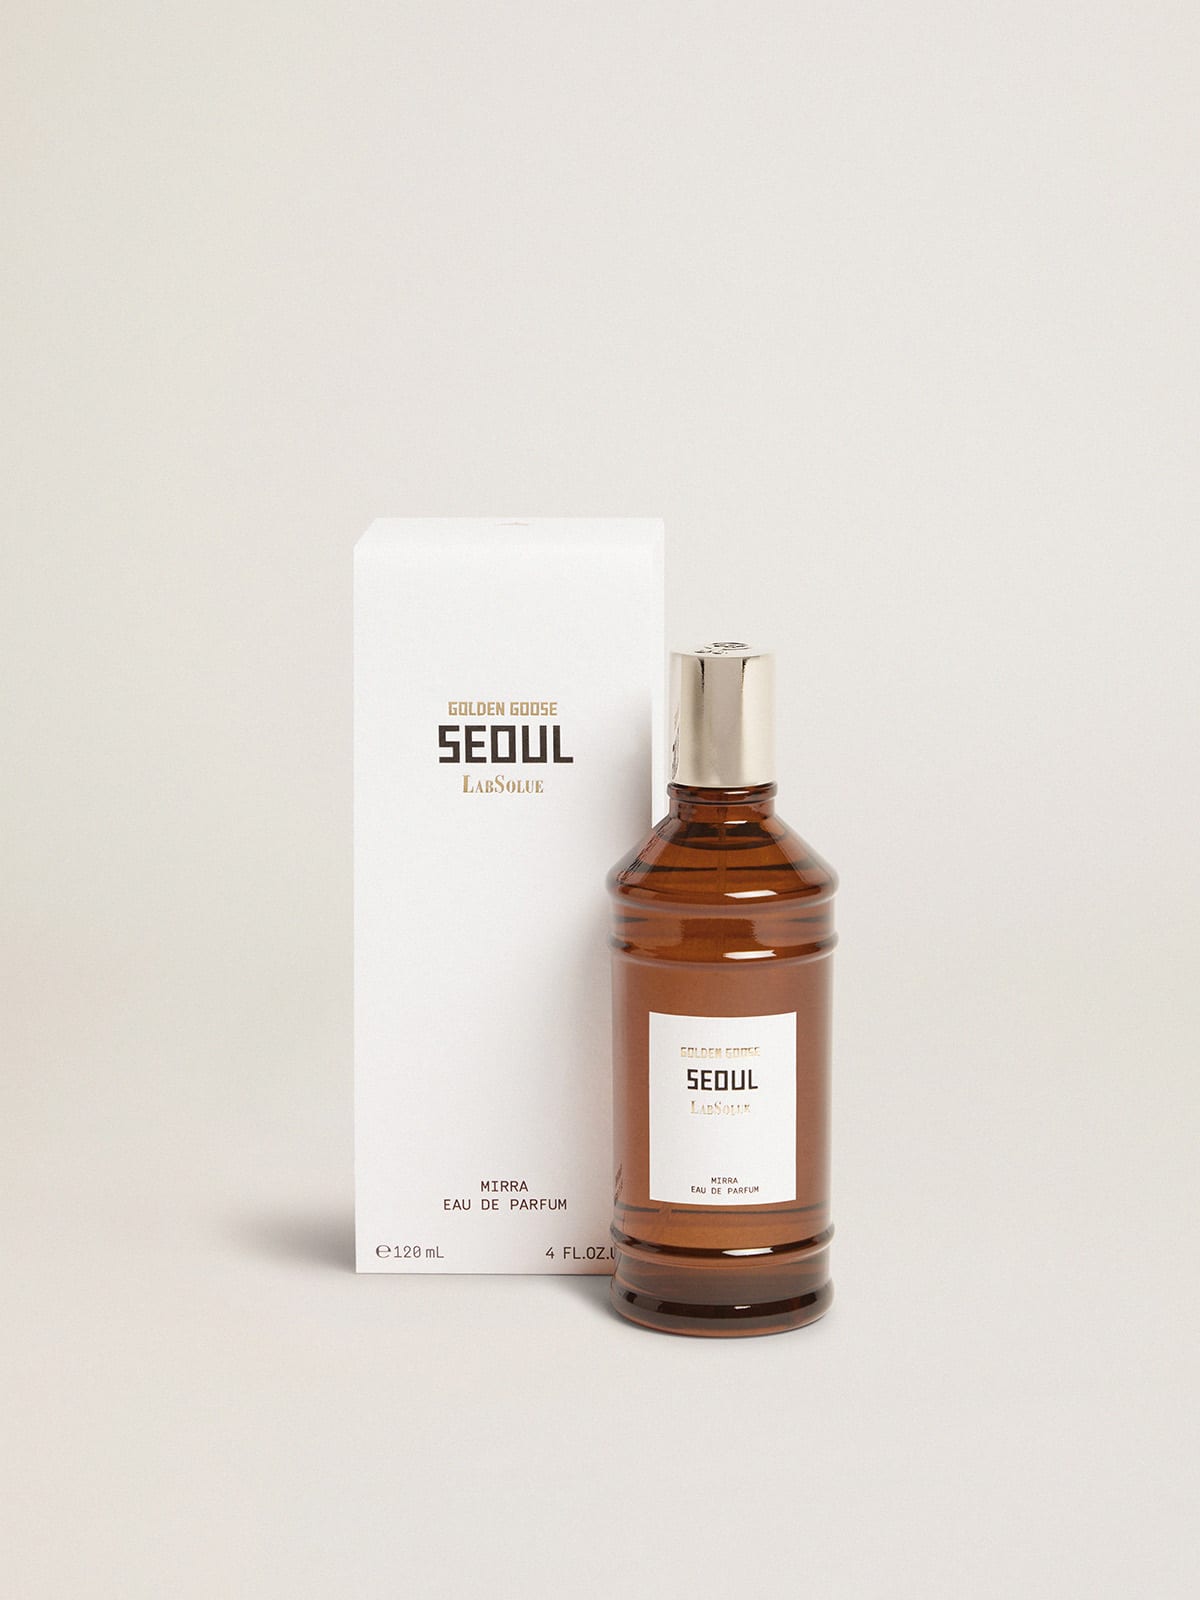 Golden Goose - Seoul Essence Myrrhe Eau de Parfum 120 ml in 